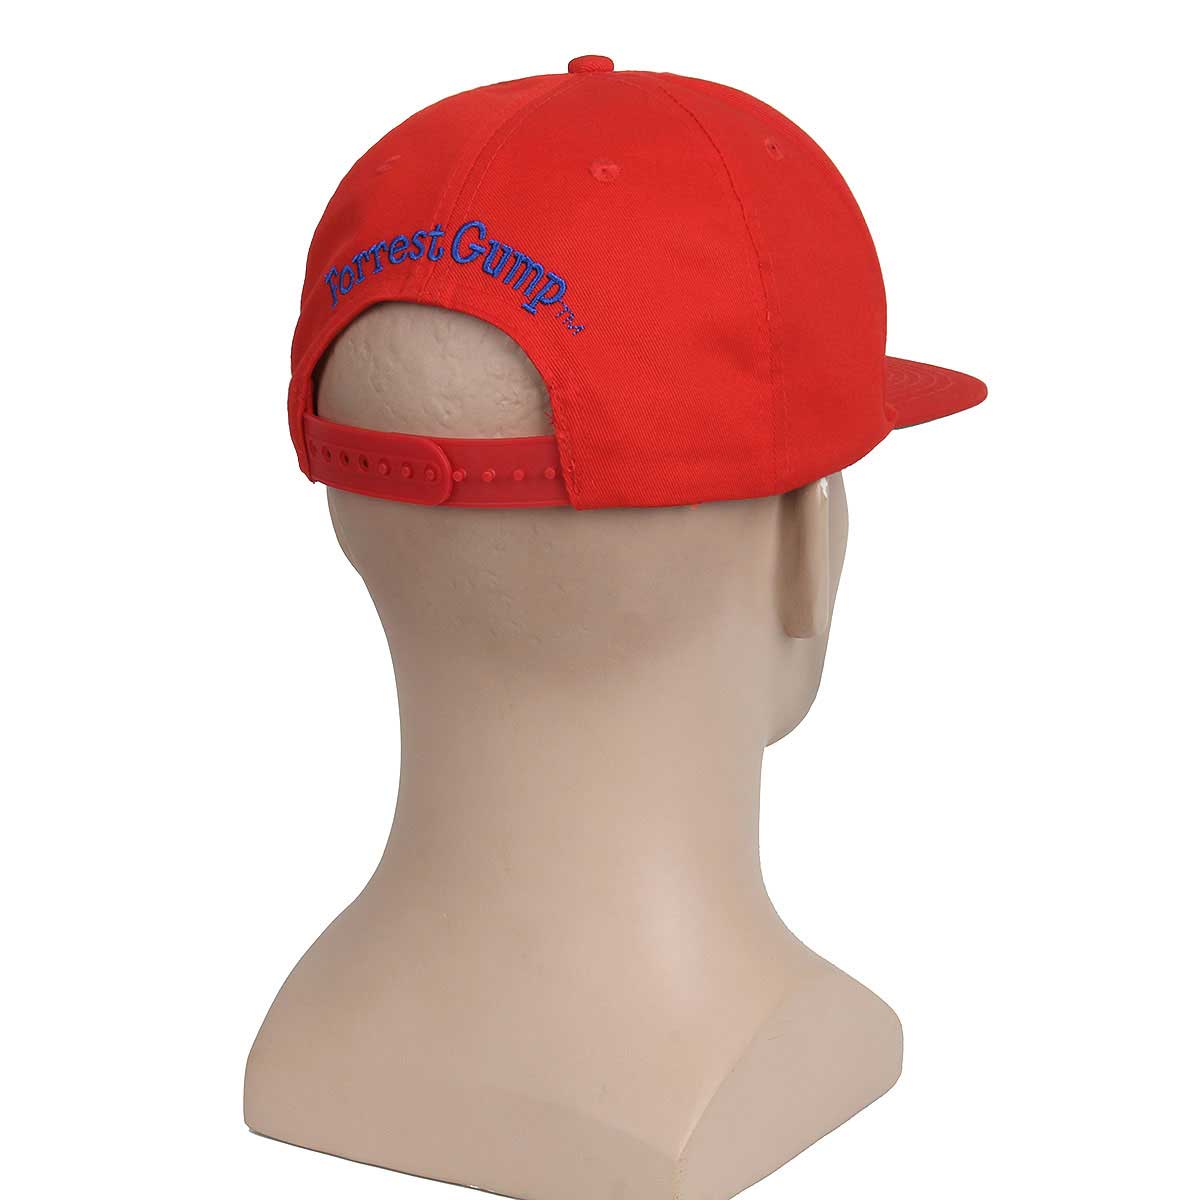 1994 Bubba Gump Shrimp CO. Baseball Hat Forrest Gump Costume Cosplay Embroidered Snapback Cap Men&Women Summer Cap